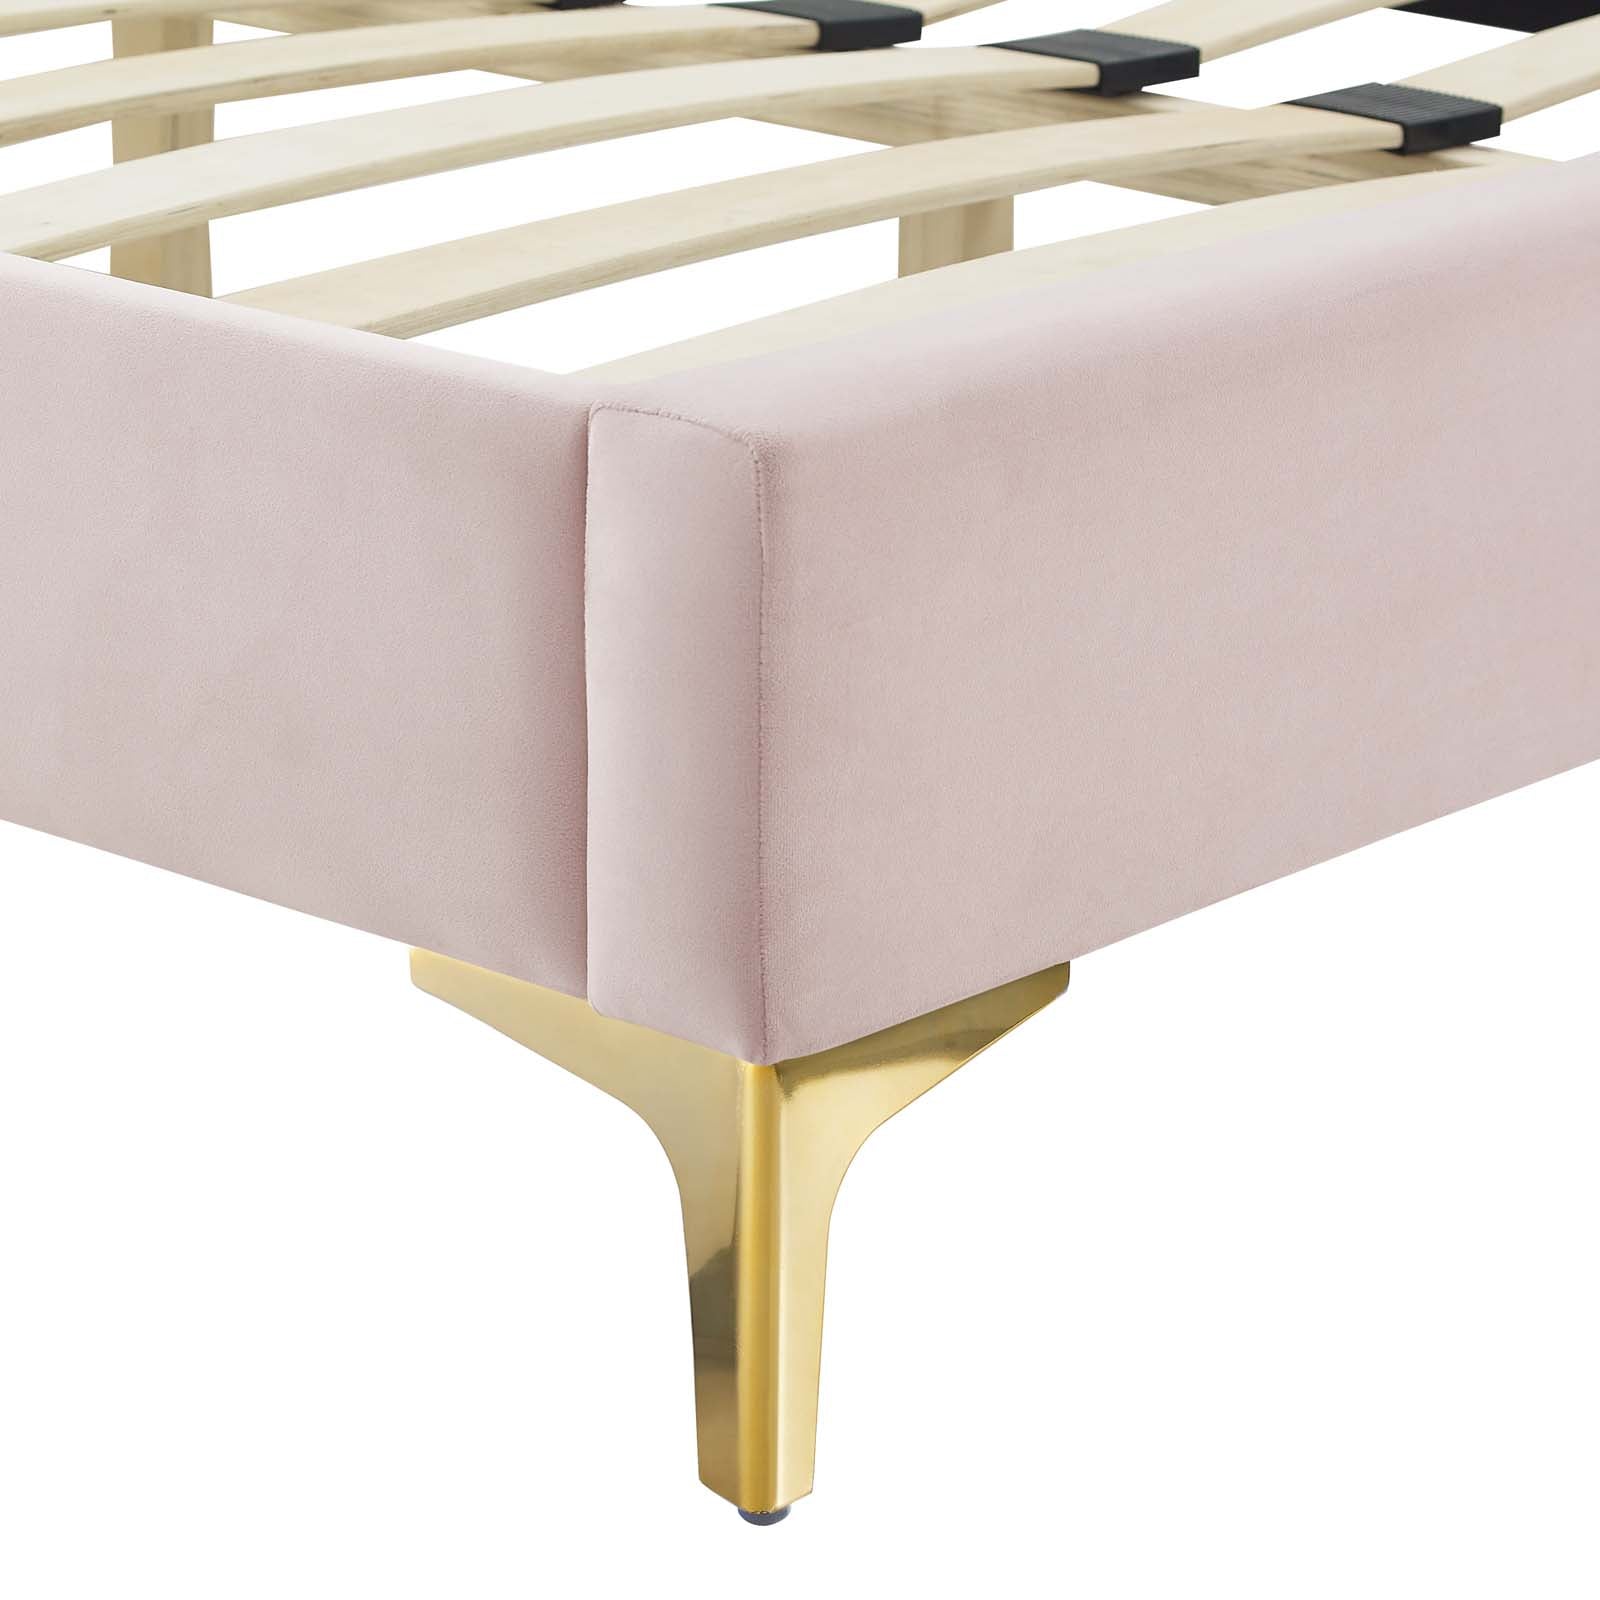 Peyton Performance Velvet Platform Bed with Gold Gold Legs - East Shore Modern Home Furnishings